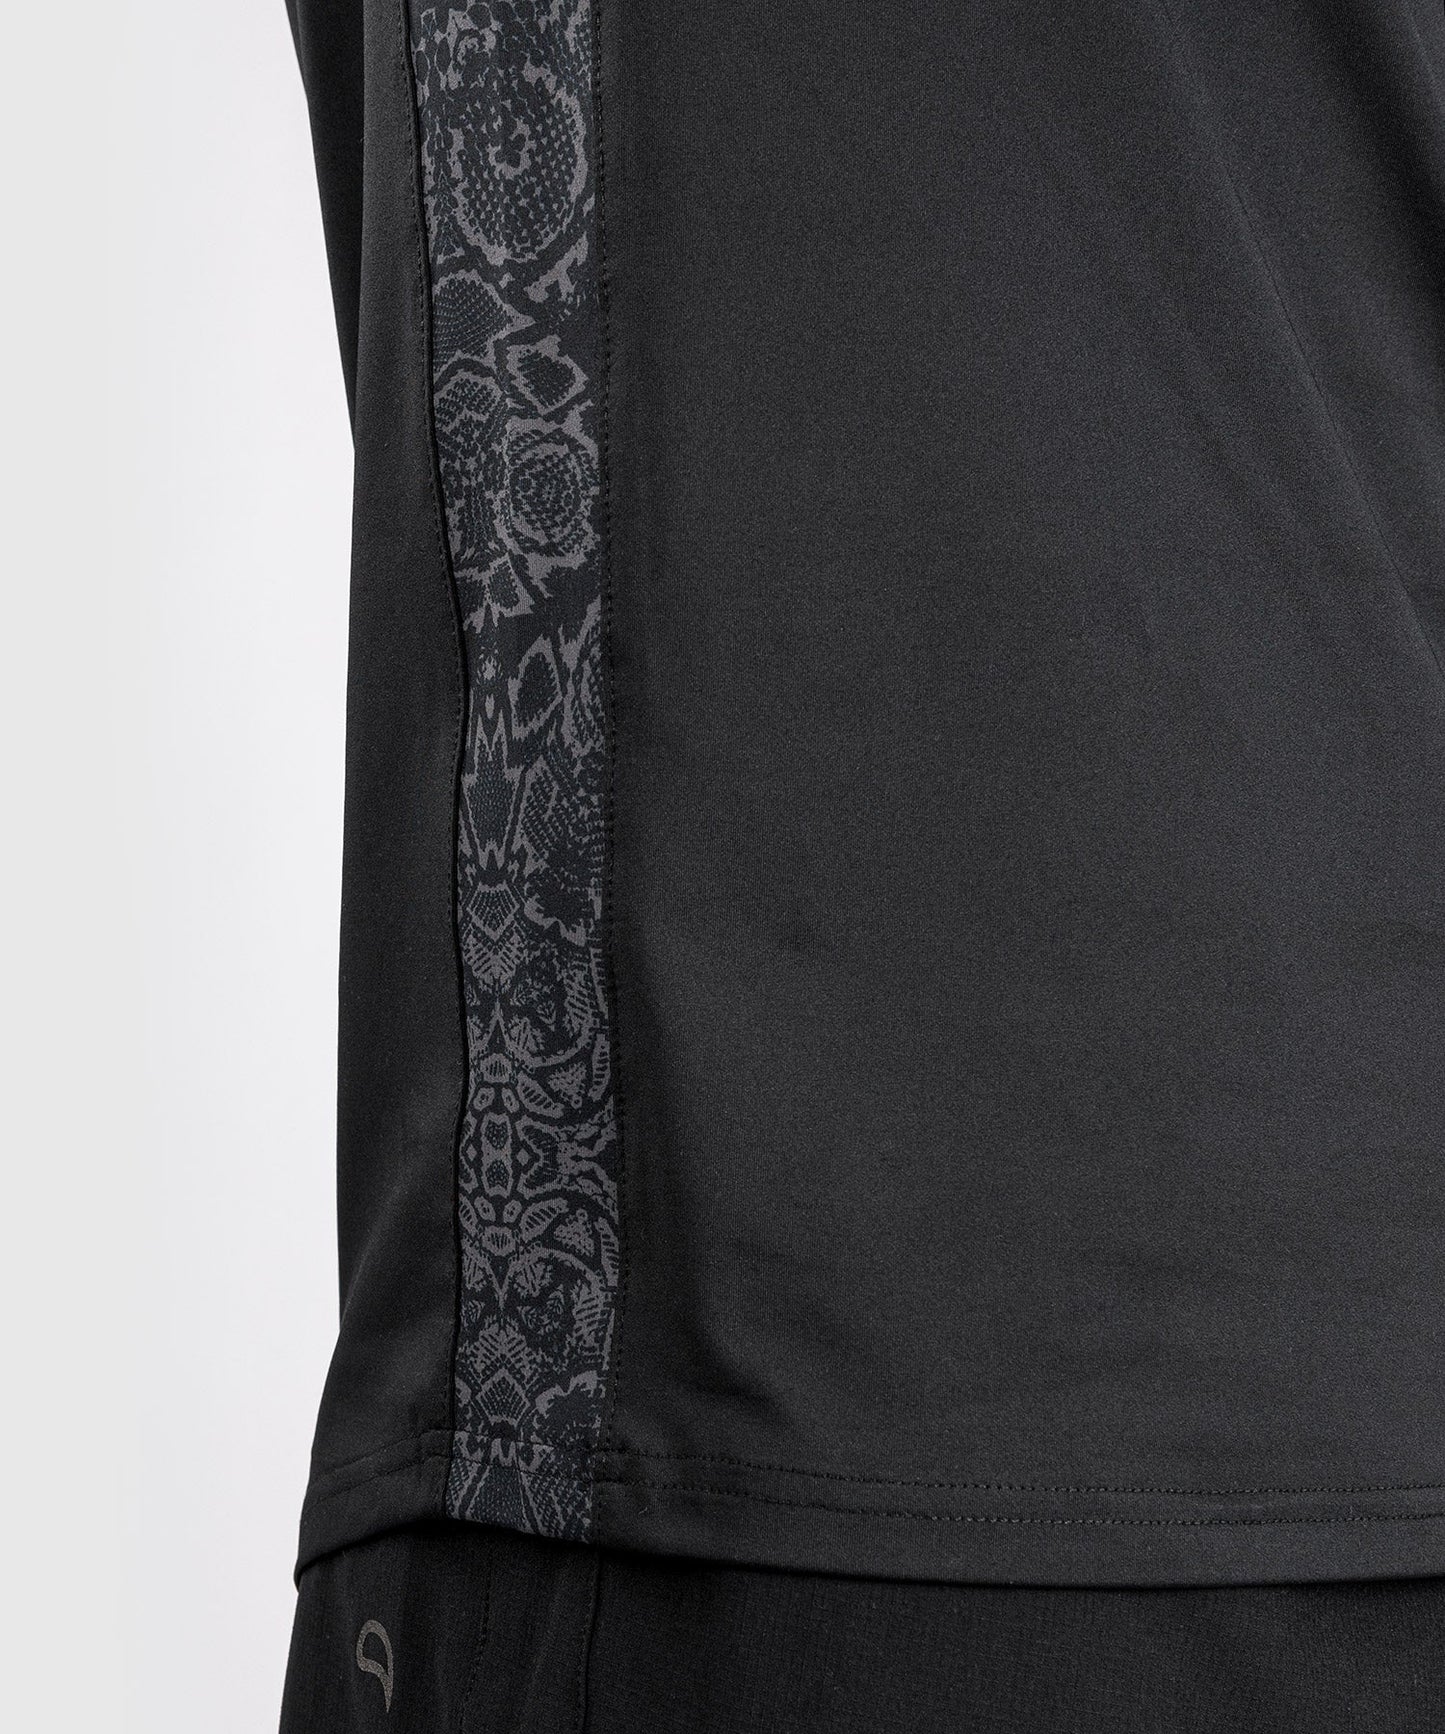 Venum Classic Evo Dry Tech T-Shirt - Black/Black Reflective